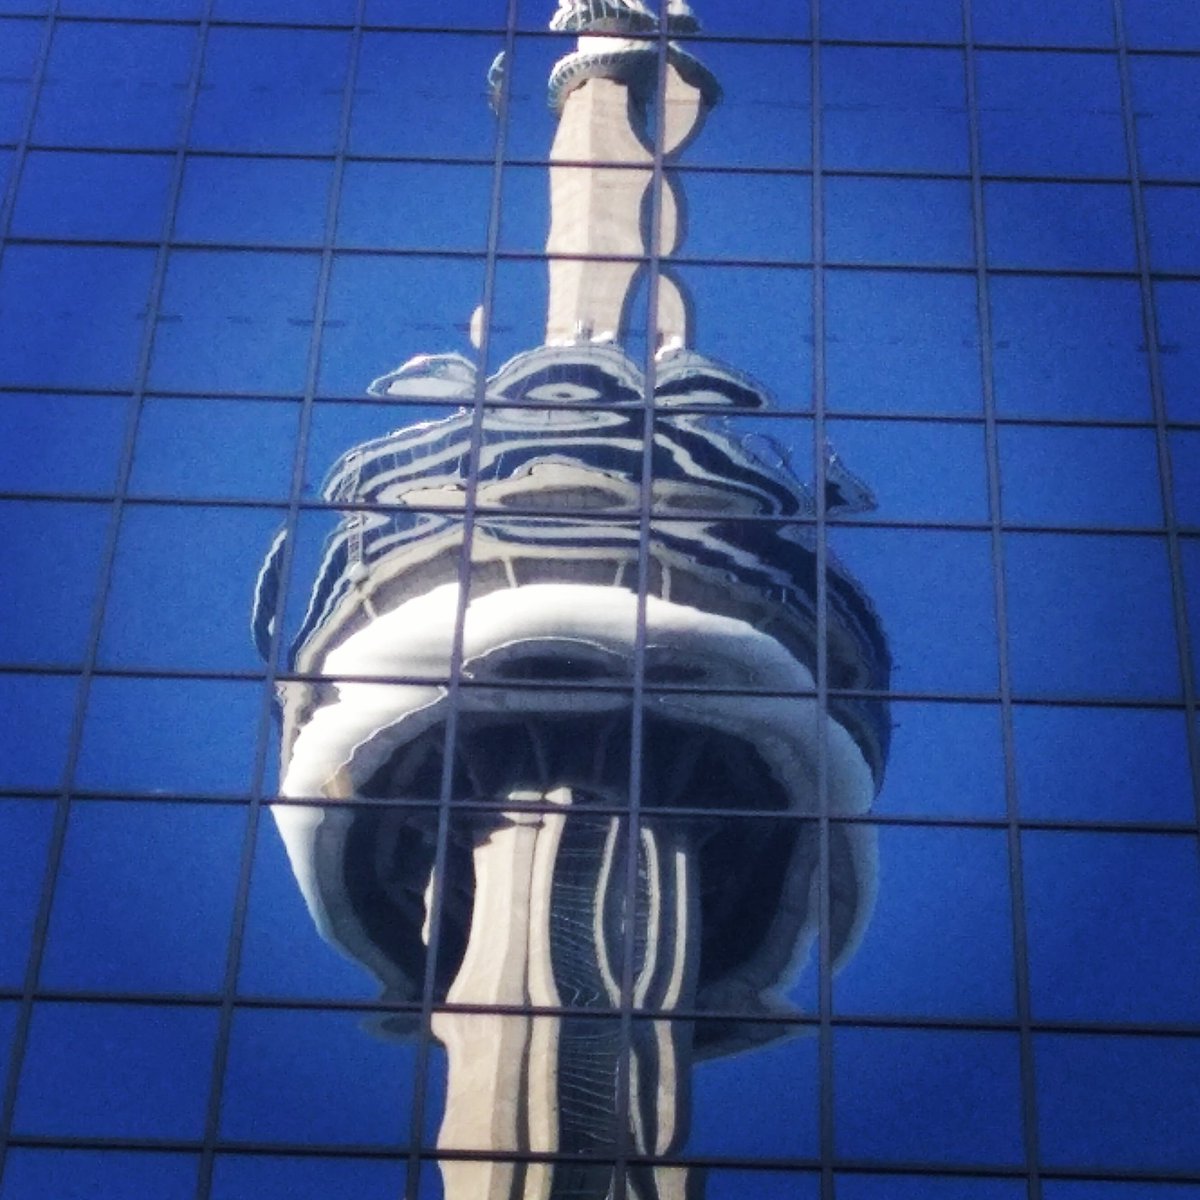 Reflected Tower. 
#Toronto #MyCNtower